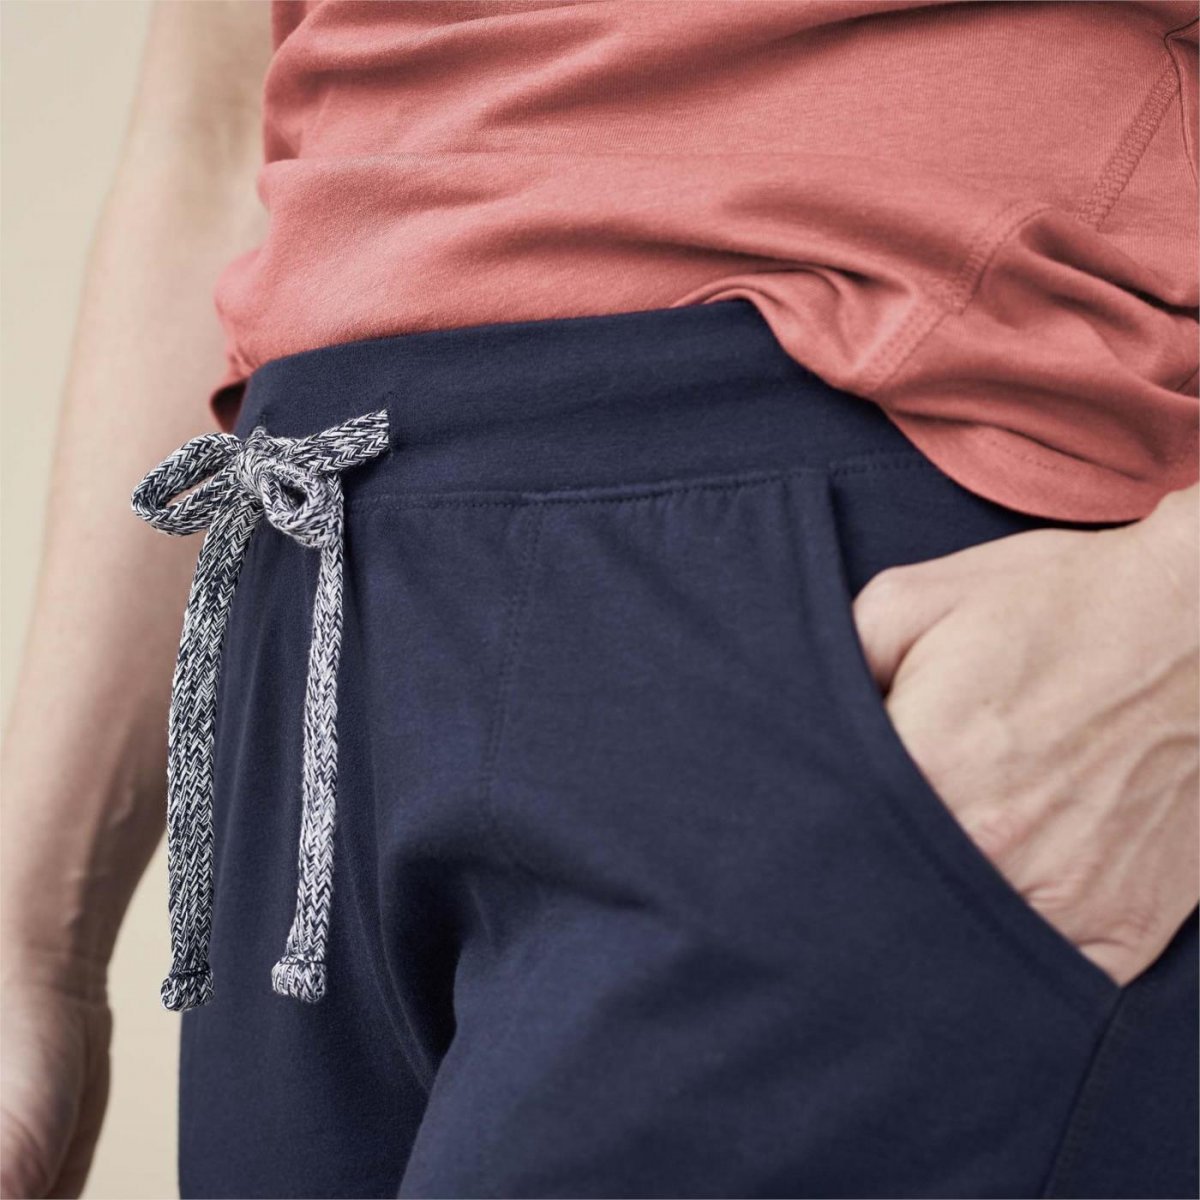 Pantaloni tuta leggeri BLU in cotone biologico